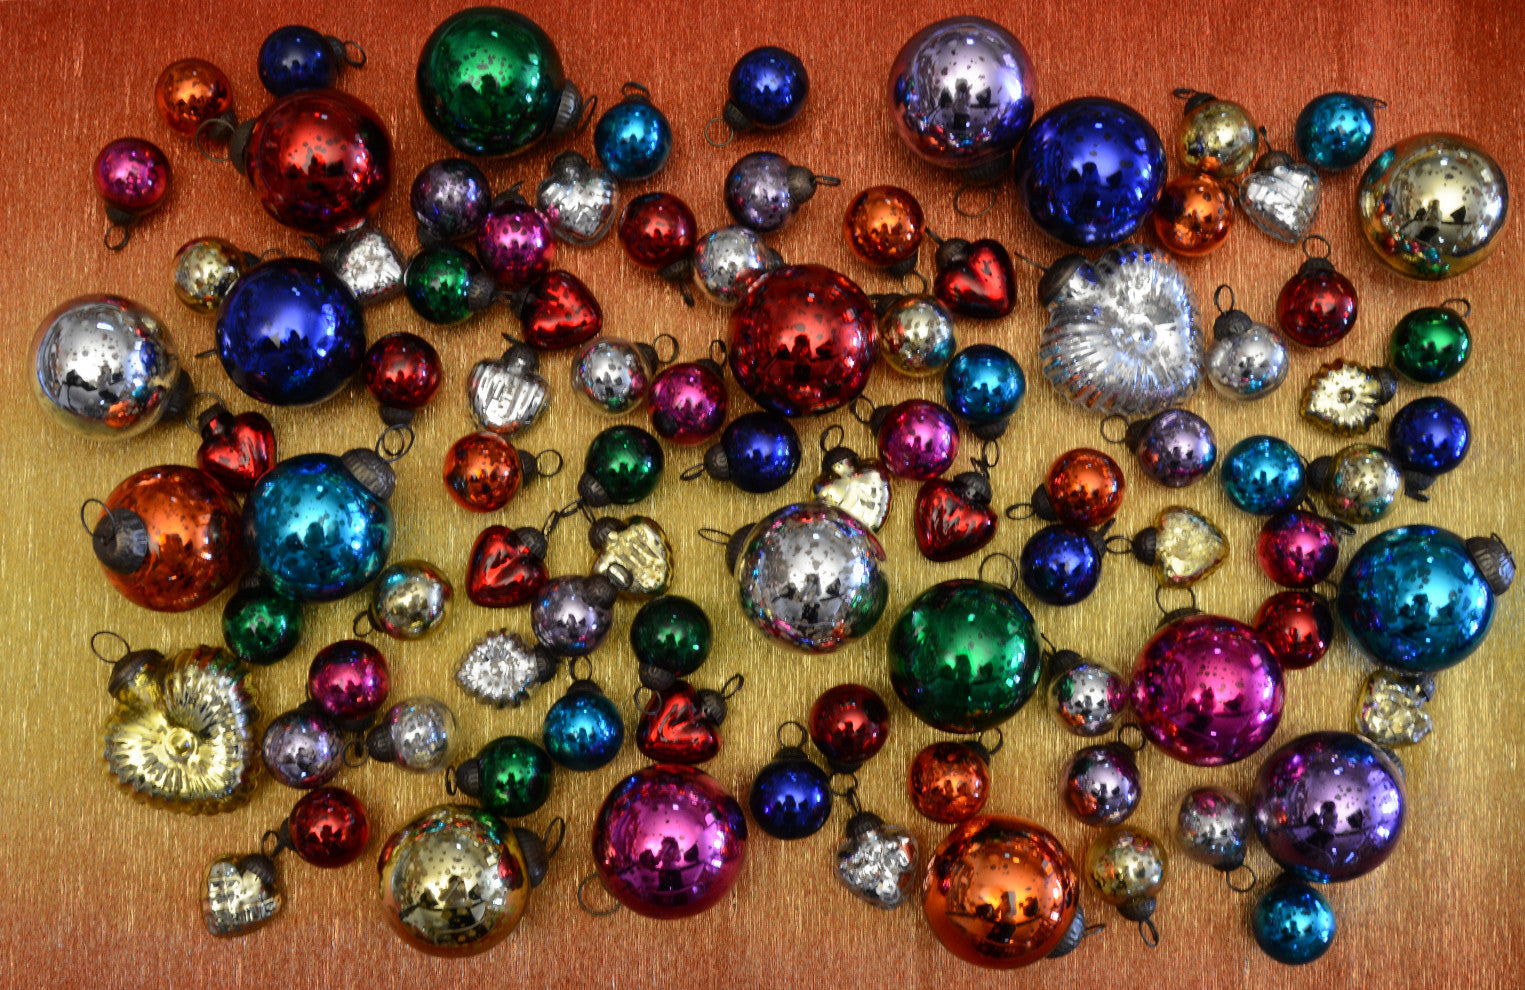 6 Pack | 1.5" Orange Ava Mini Mercury Handcrafted Glass Balls Ornaments Christmas Tree Decoration